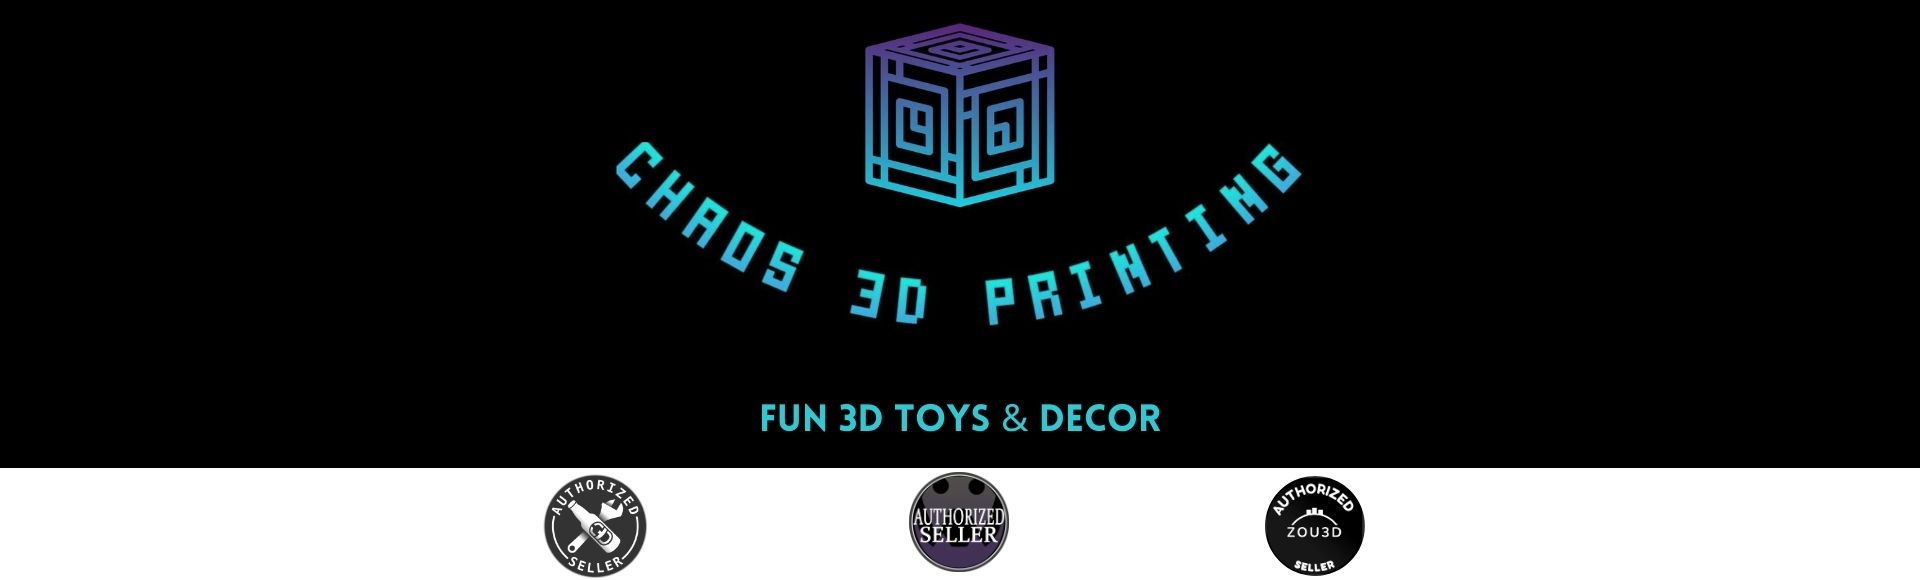 Chaos-3D-Printing-Australian-made-3D-fidget-toys-home-decor-keyrings-articulated-dragons